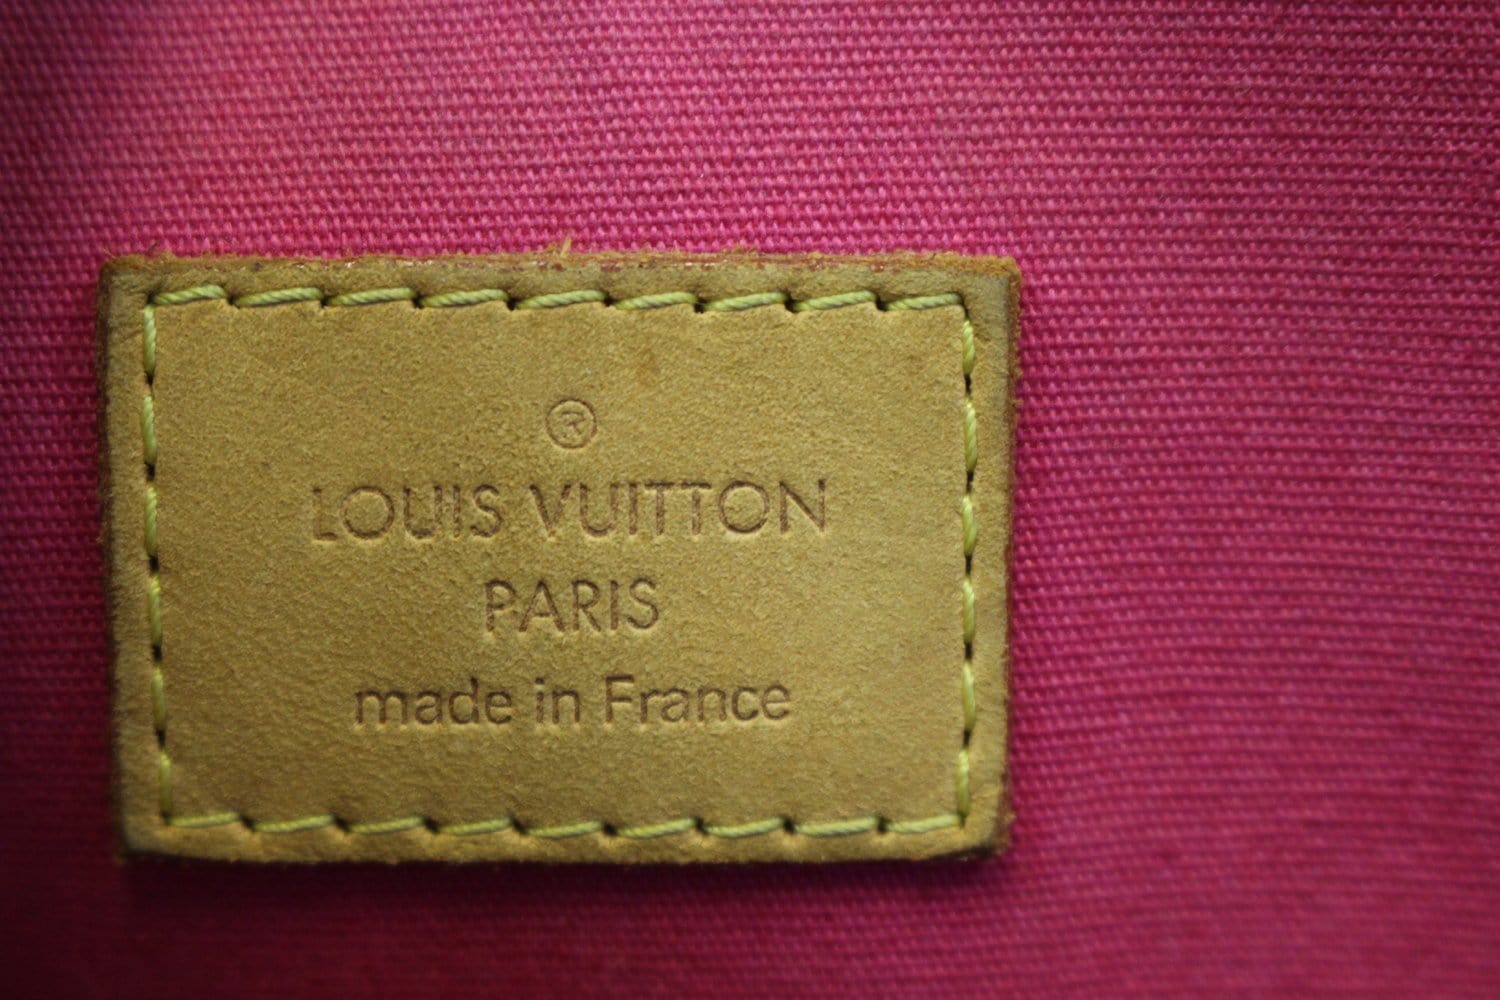 Louis Vuitton Louis Vuitton Good Luck Neon Pink & Orange Vernis